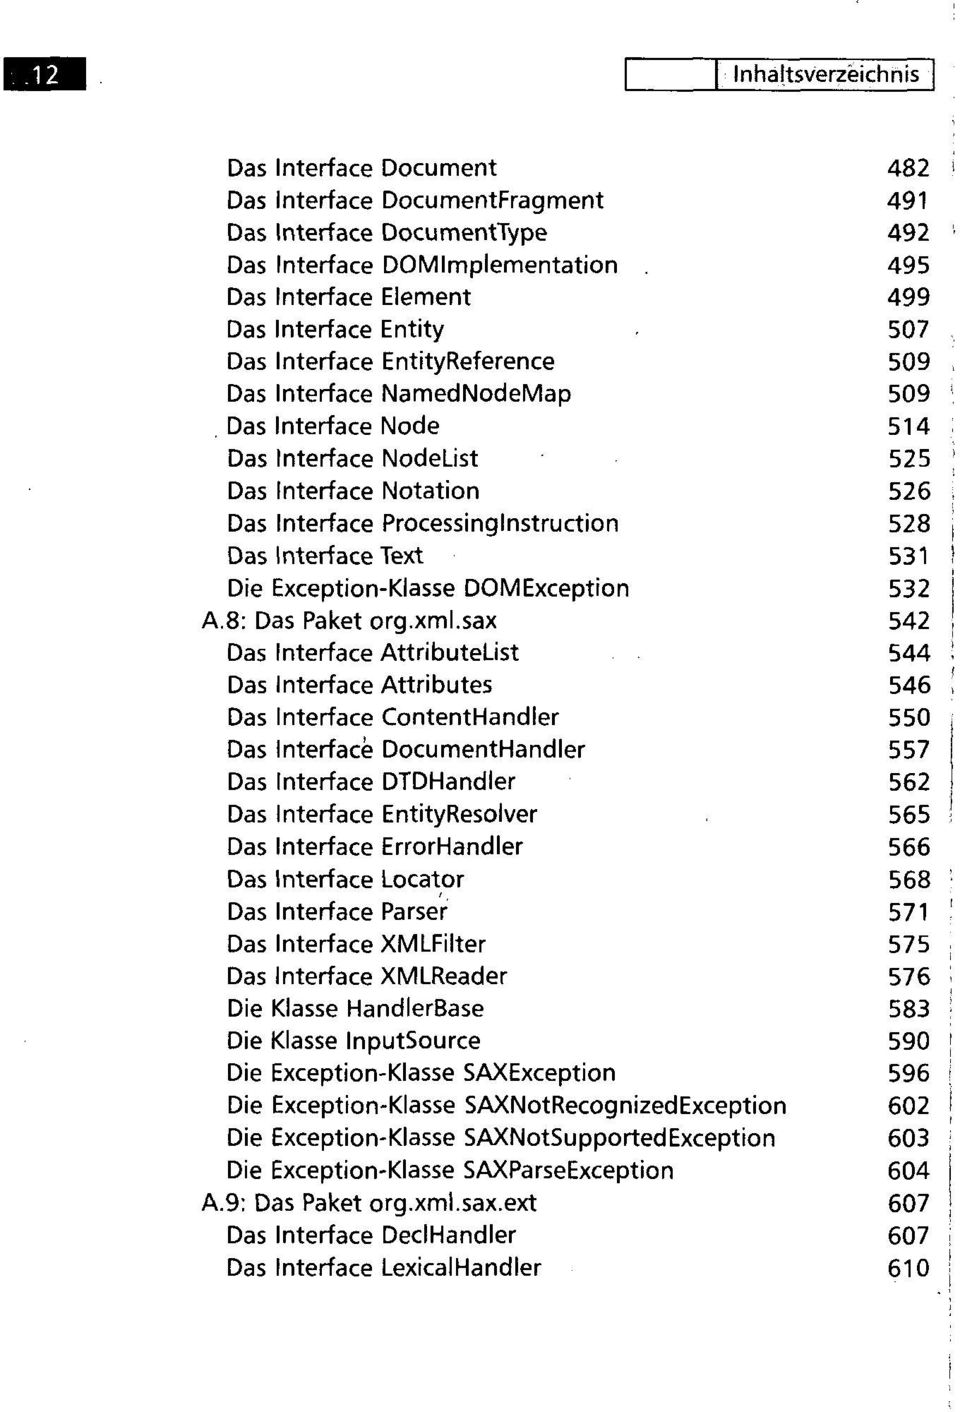 Das Interface Processinglnstruction 528 Das Interface Text 531 Die Exception-Klasse DOMException 532 A.8: Das Paket org.xml.